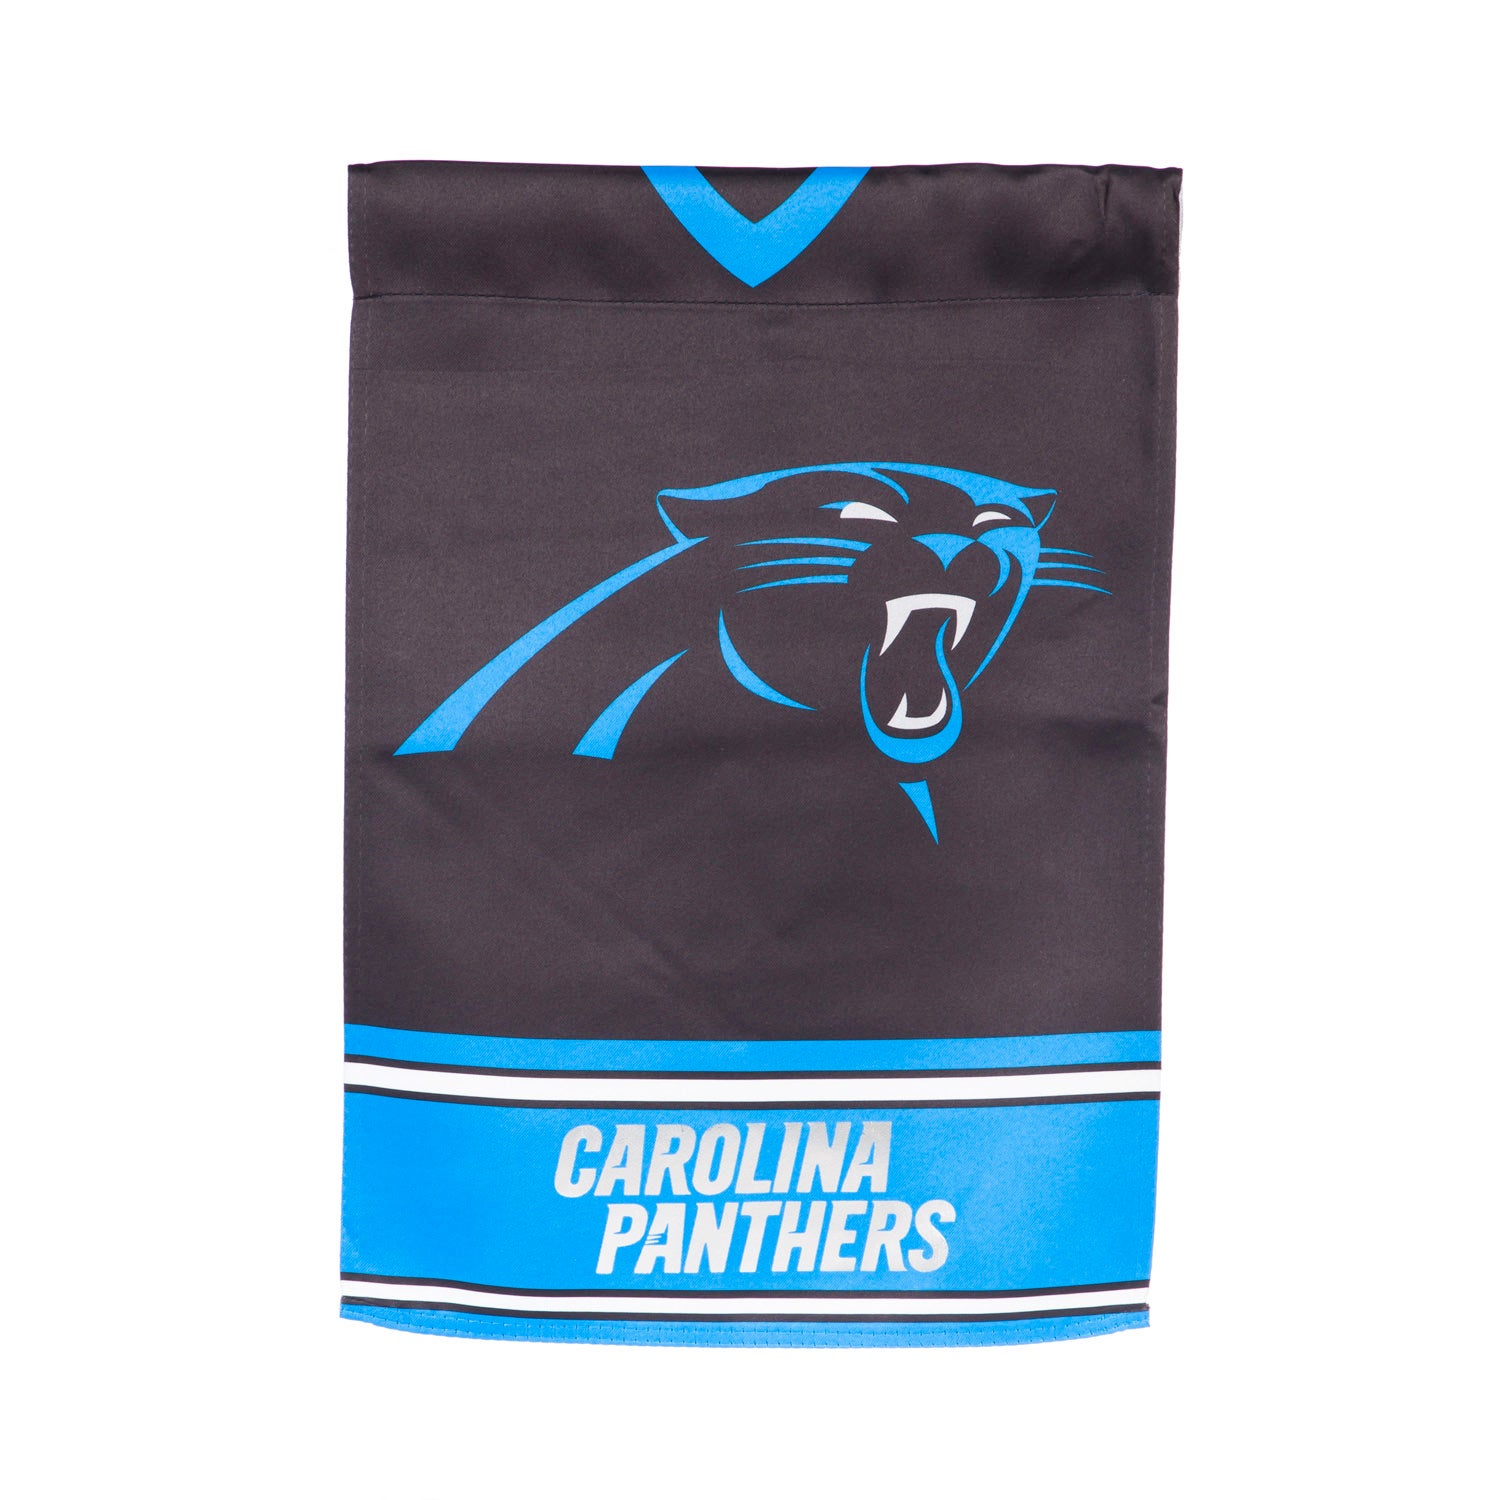 Carolina Panthers Double Sided Jersey House Flag